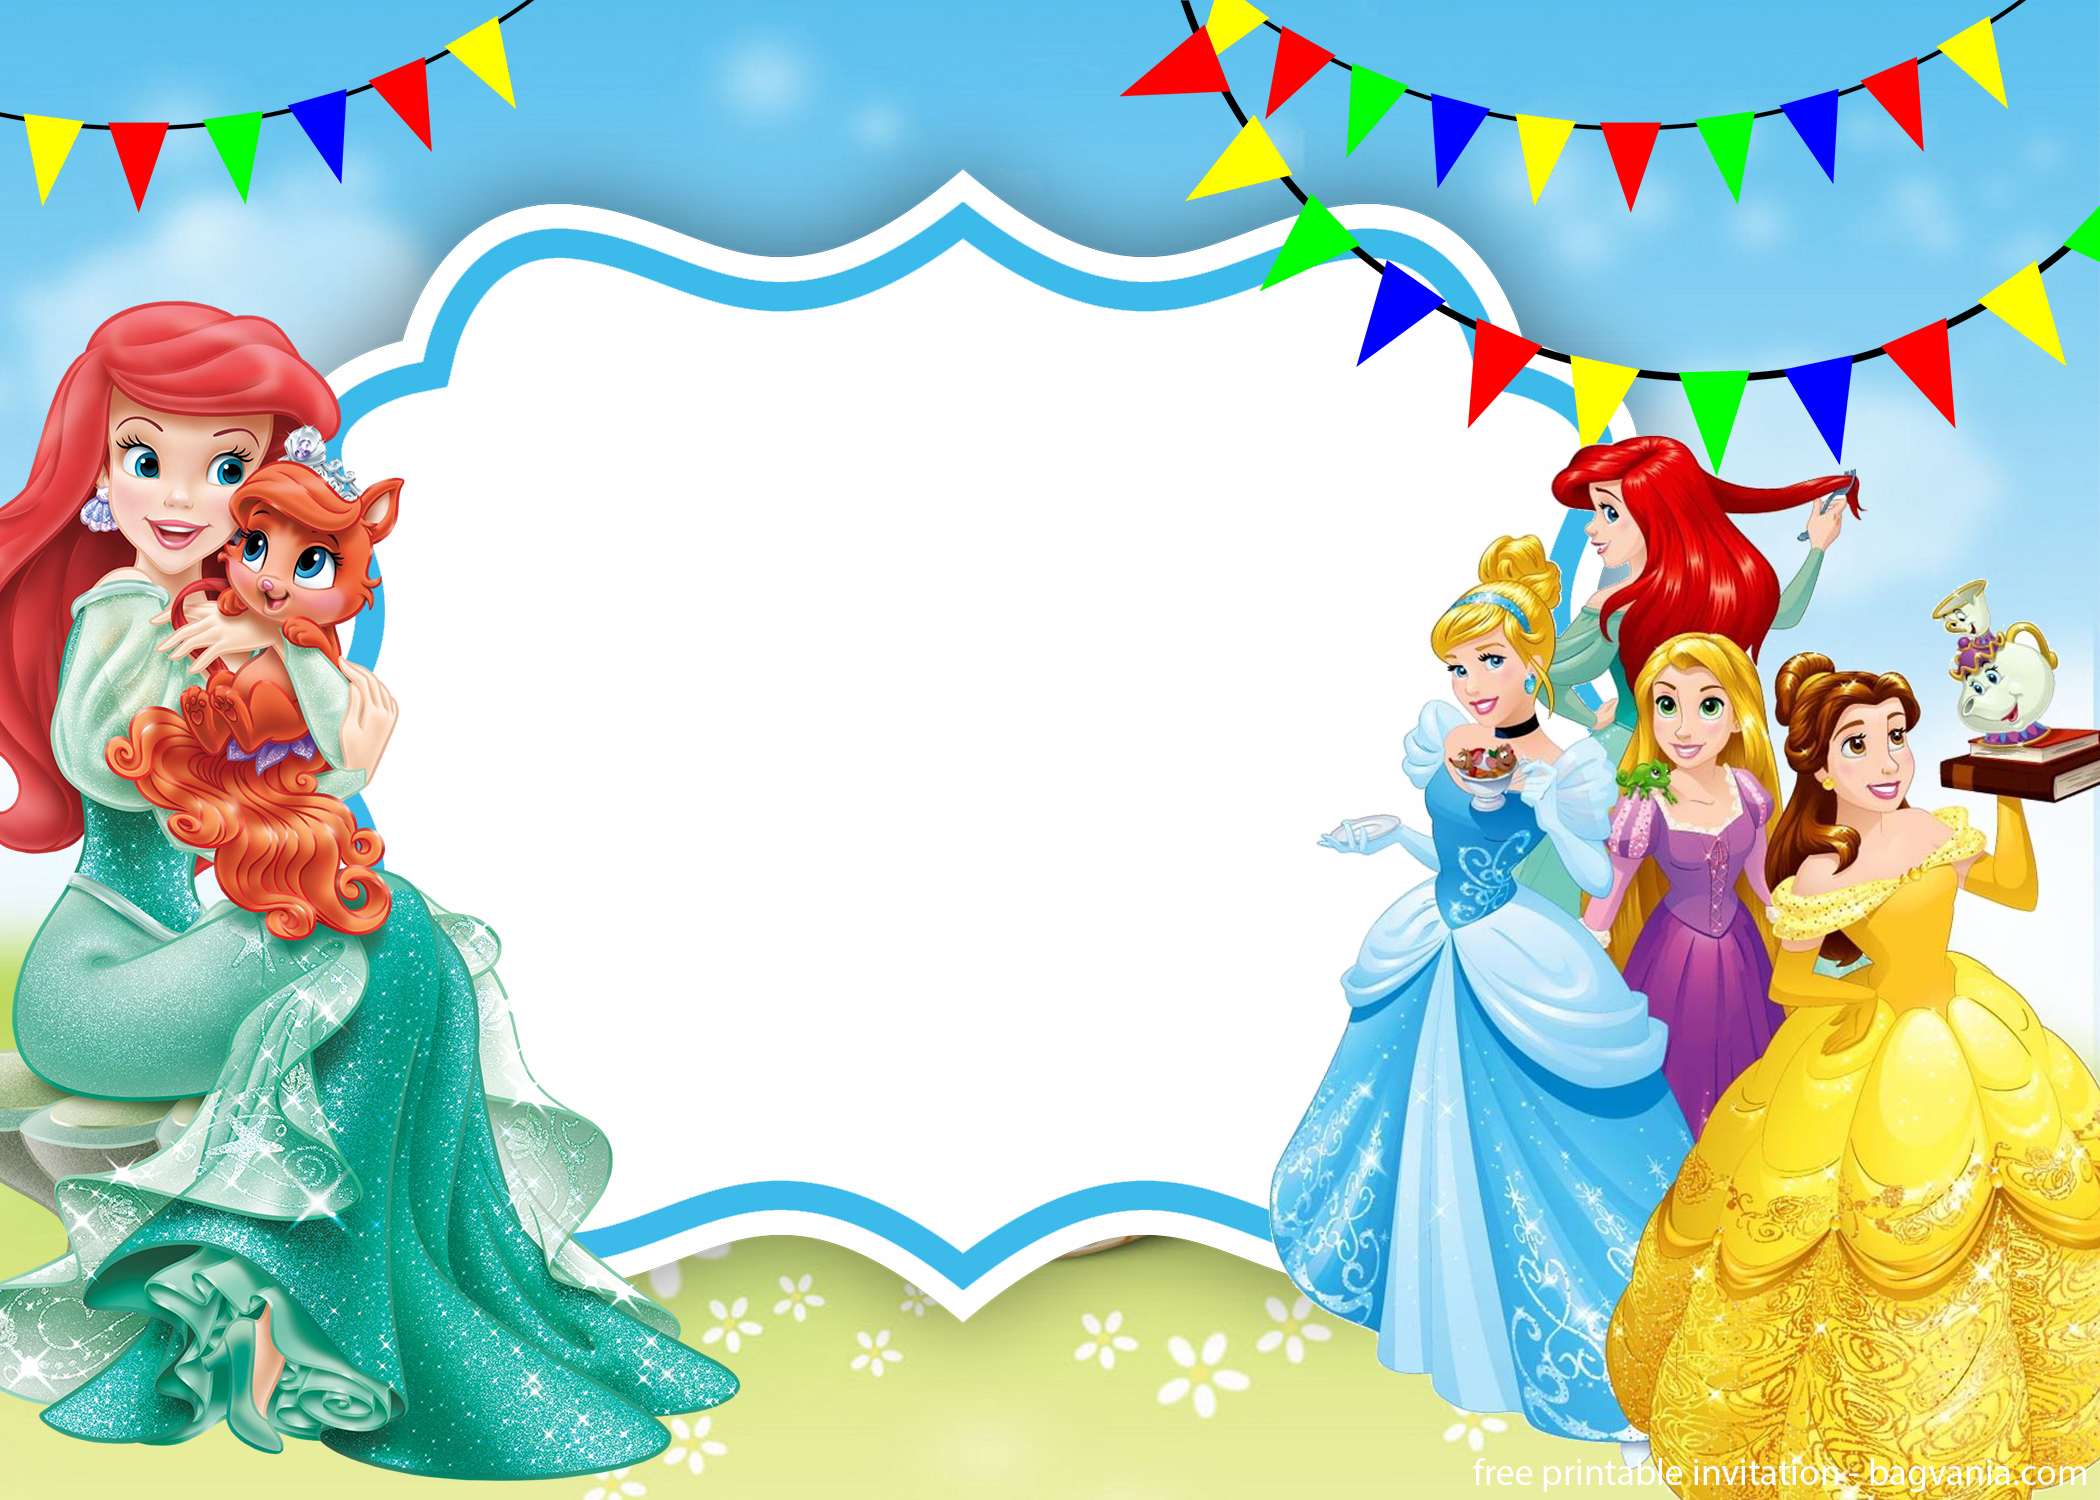 free-printable-princess-invitation-templates-disney-princess-invitations-princess-birthday